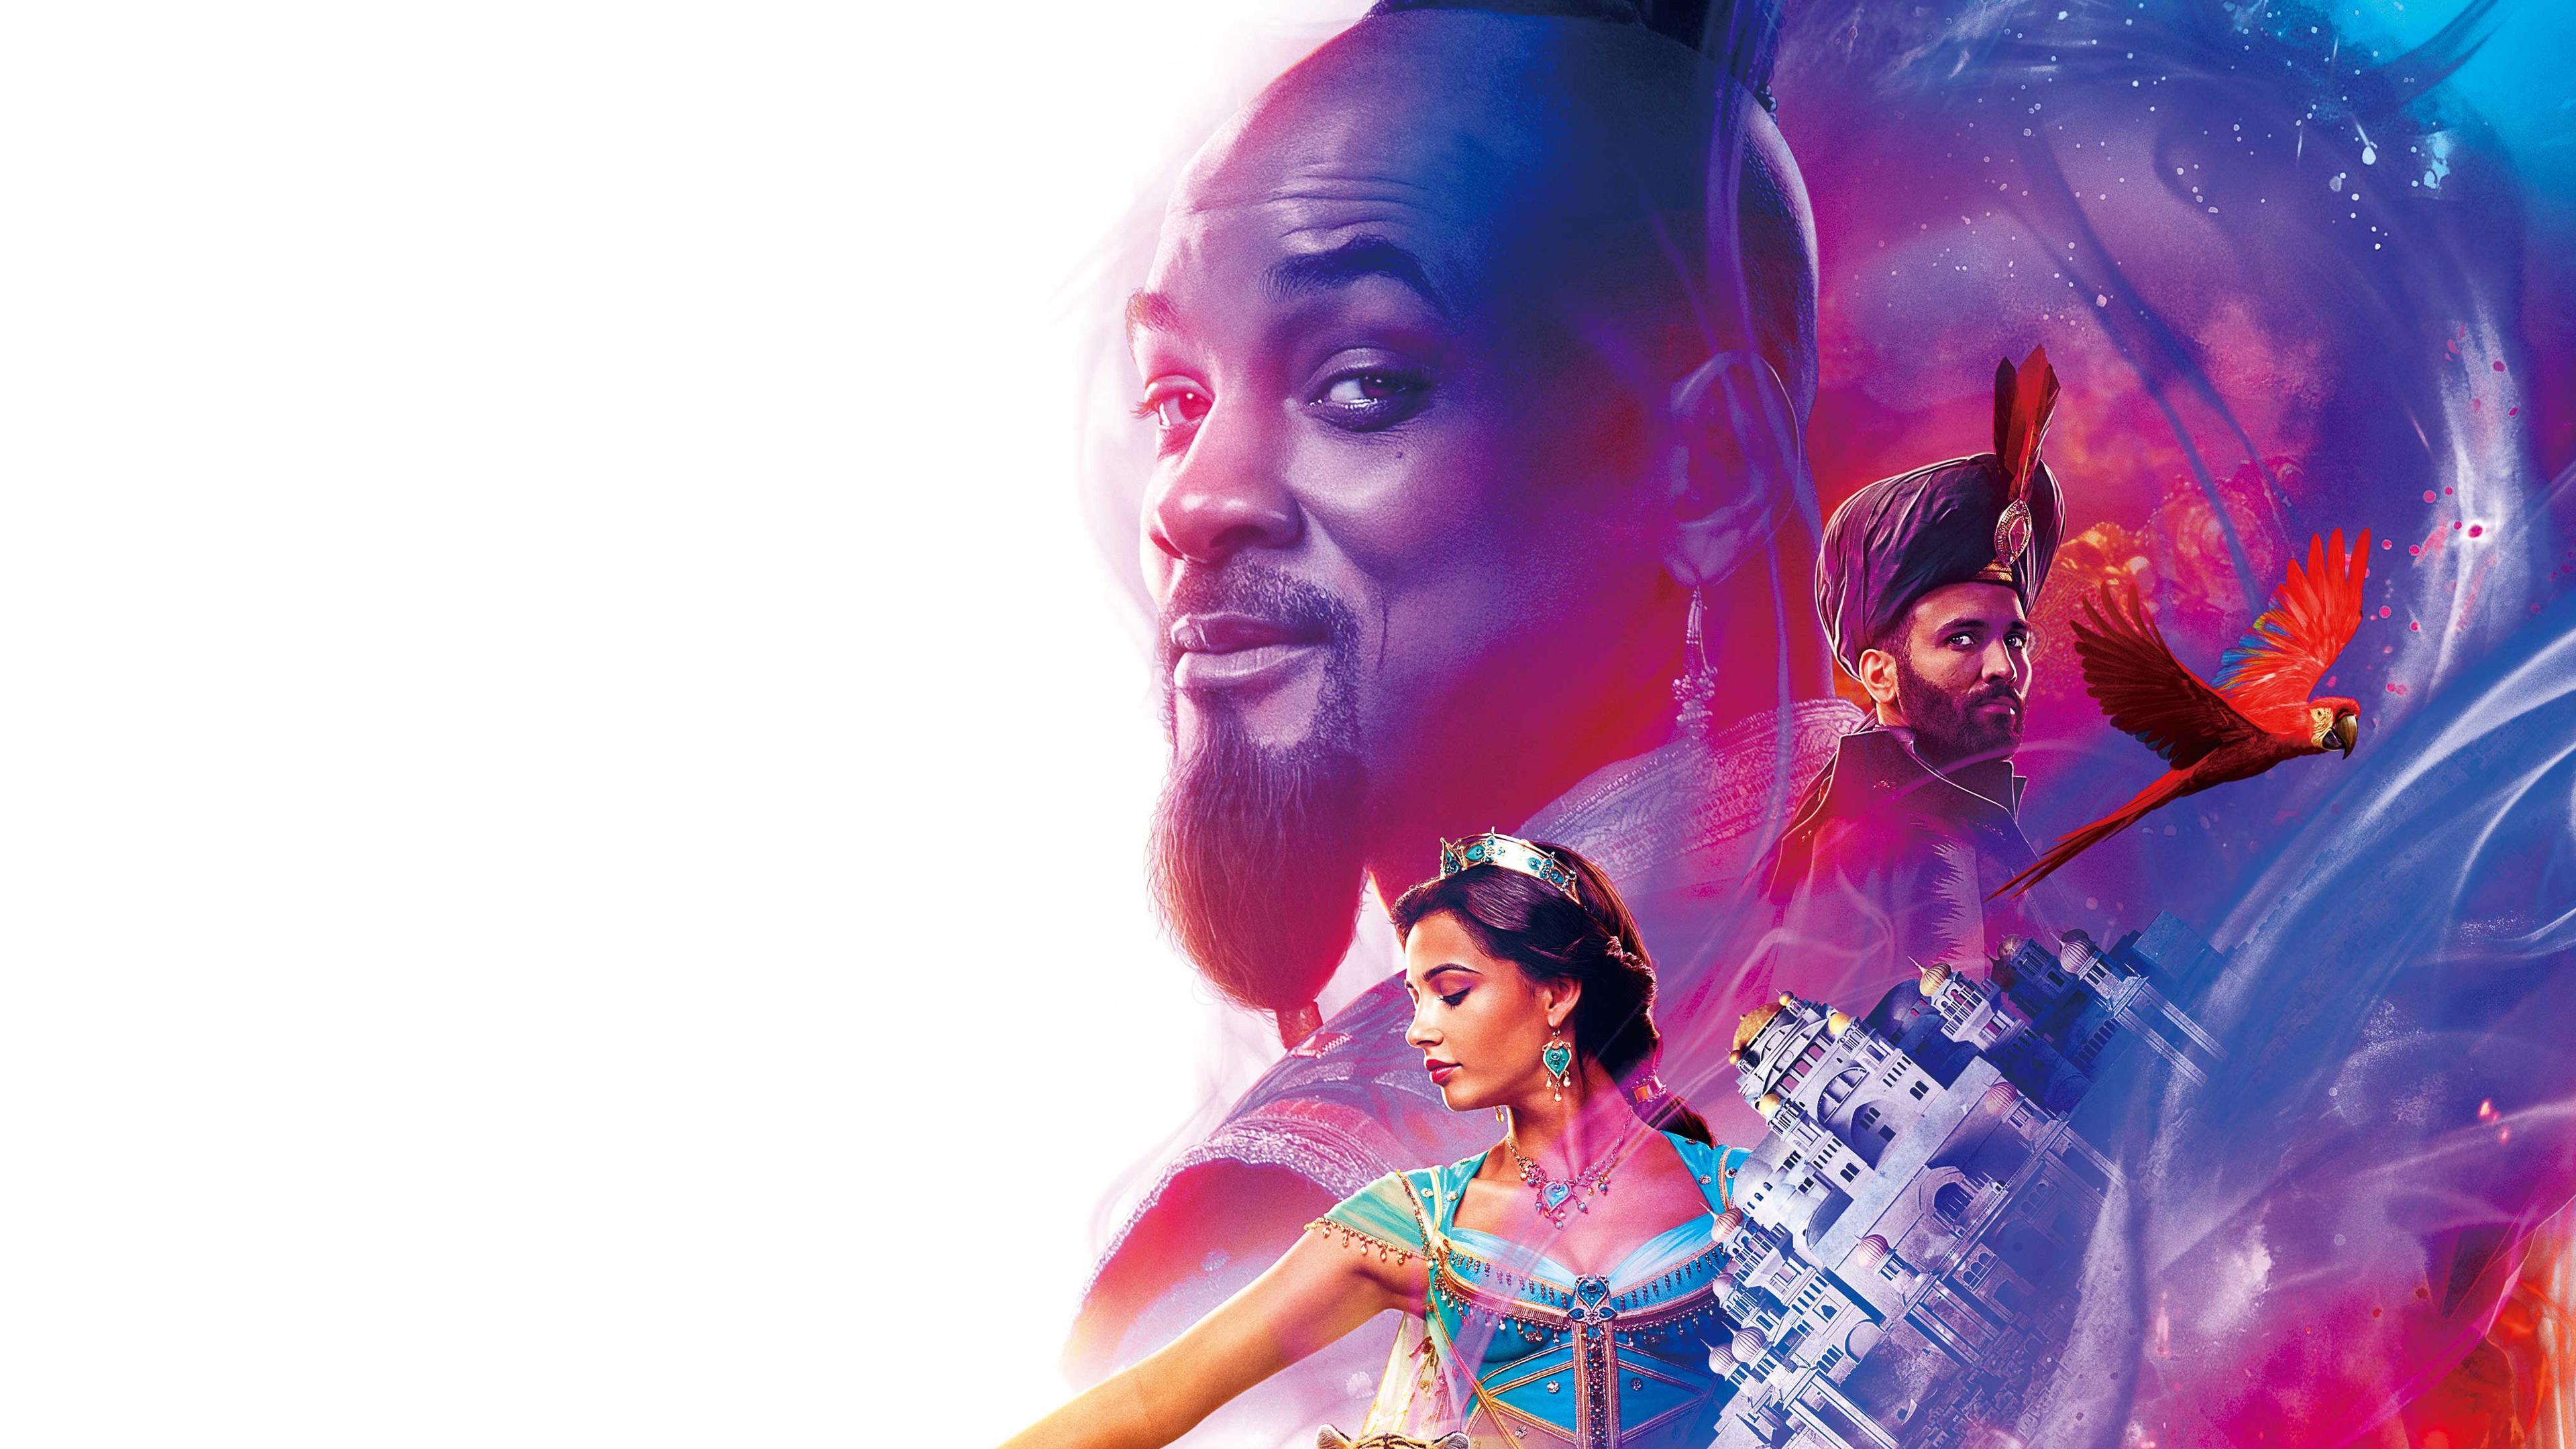 Wallpaper 4k Aladdin Movie Poster 4k 2019 movies wallpaper